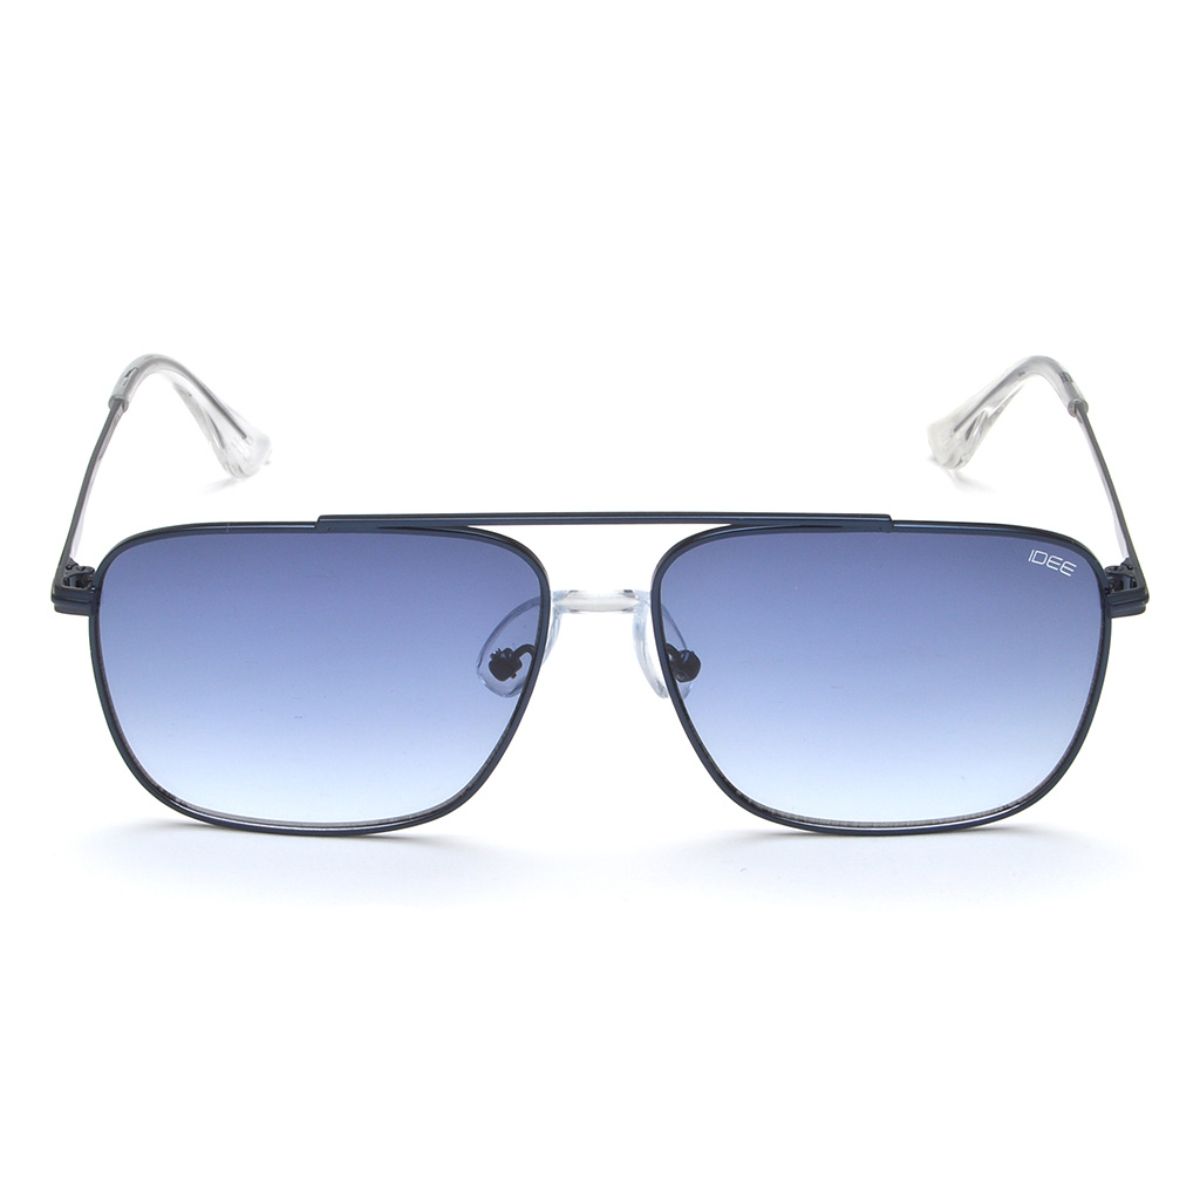 IDEE S2921 C3 58 Blue Lens Sunglasses for Men (58): Buy IDEE S2921 C3 ...